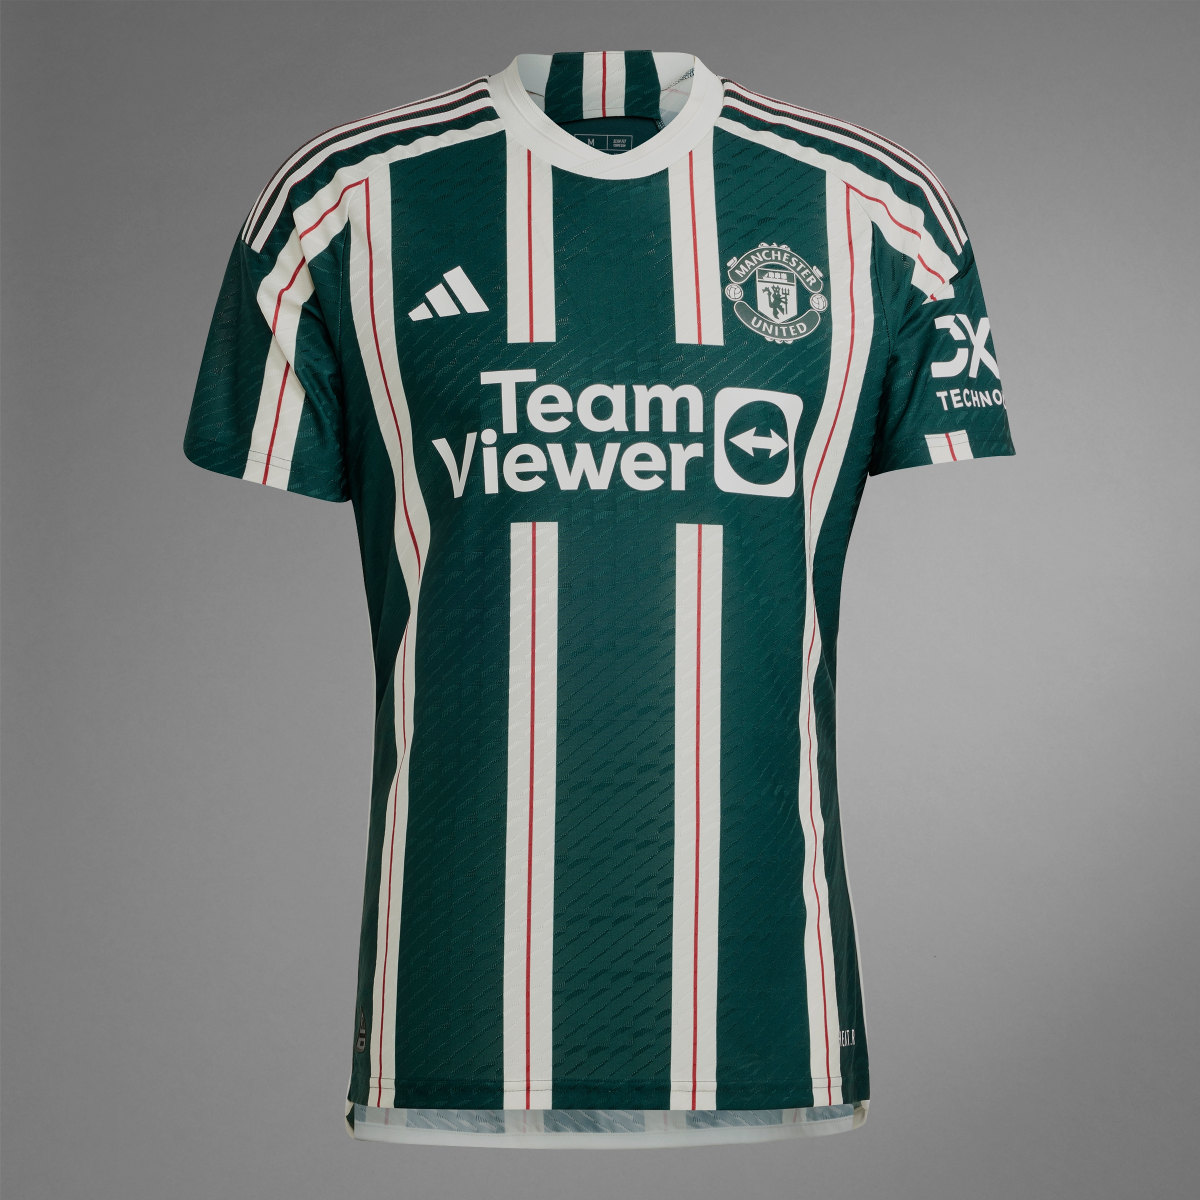 Adidas Camisola Alternativa Oficial 23/24 do Manchester United. 10